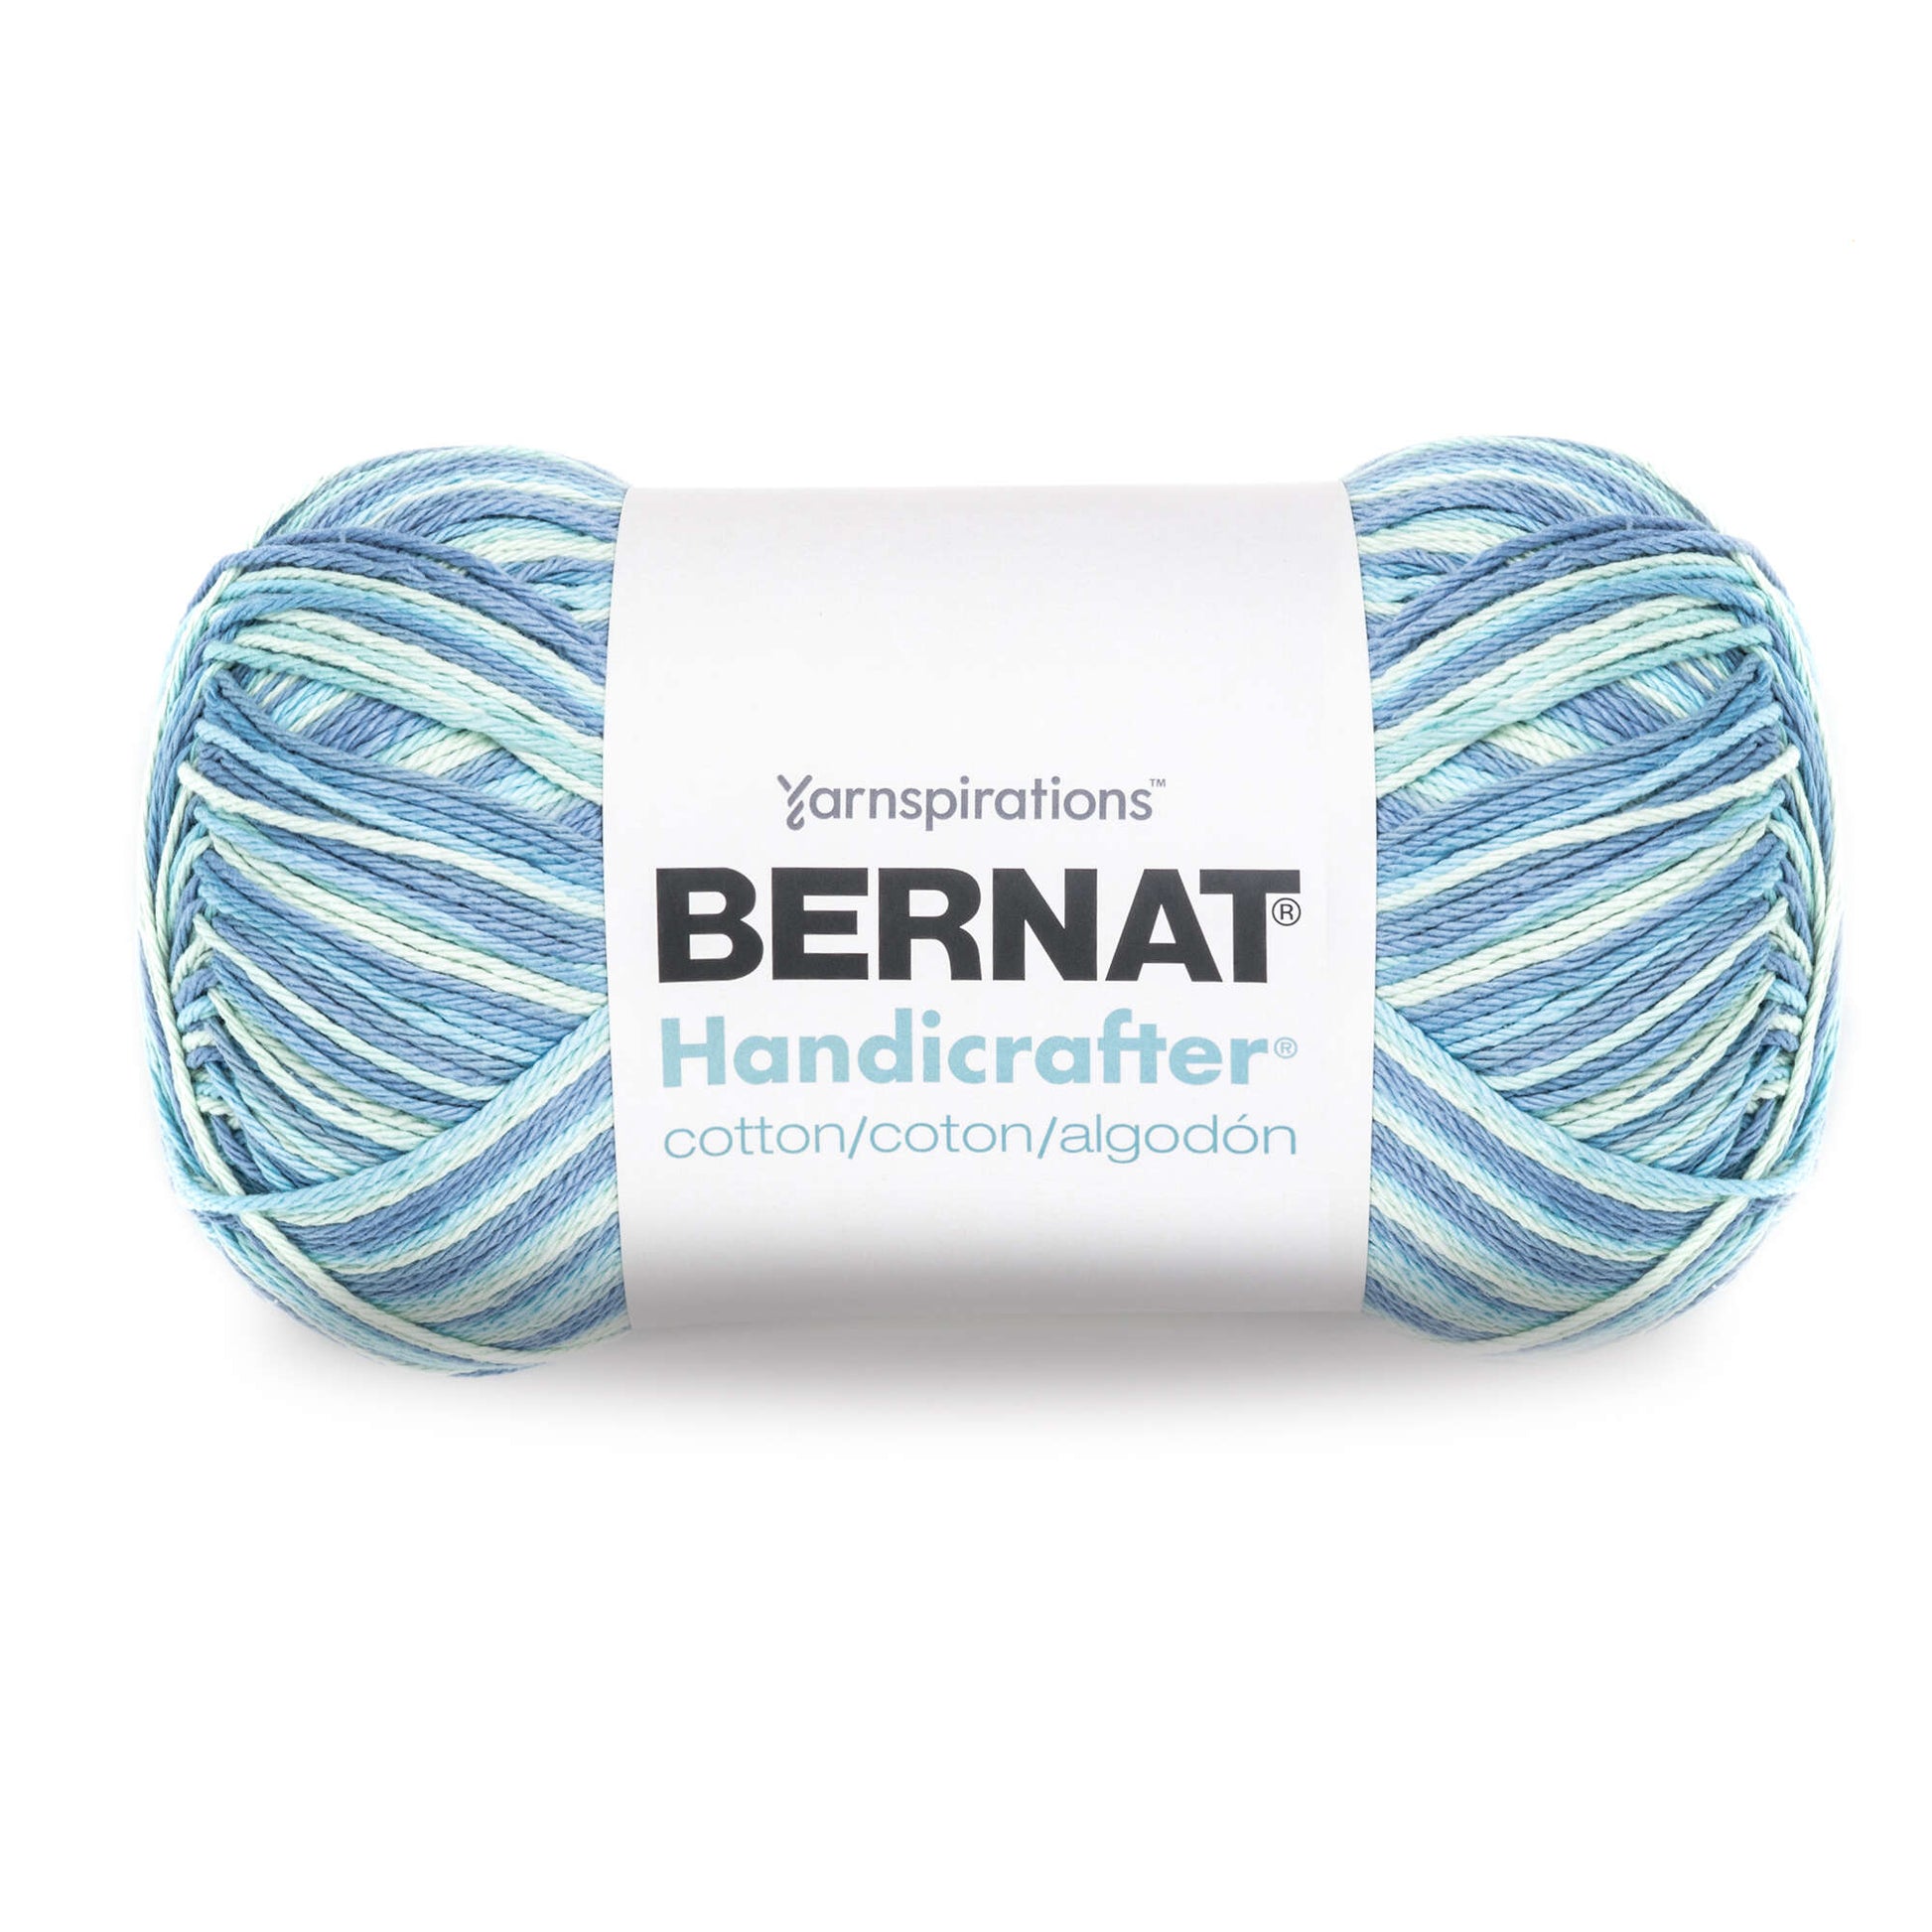 Bernat Handicrafter Cotton Ombres Yarn (340g/12oz) - Discontinued Shades